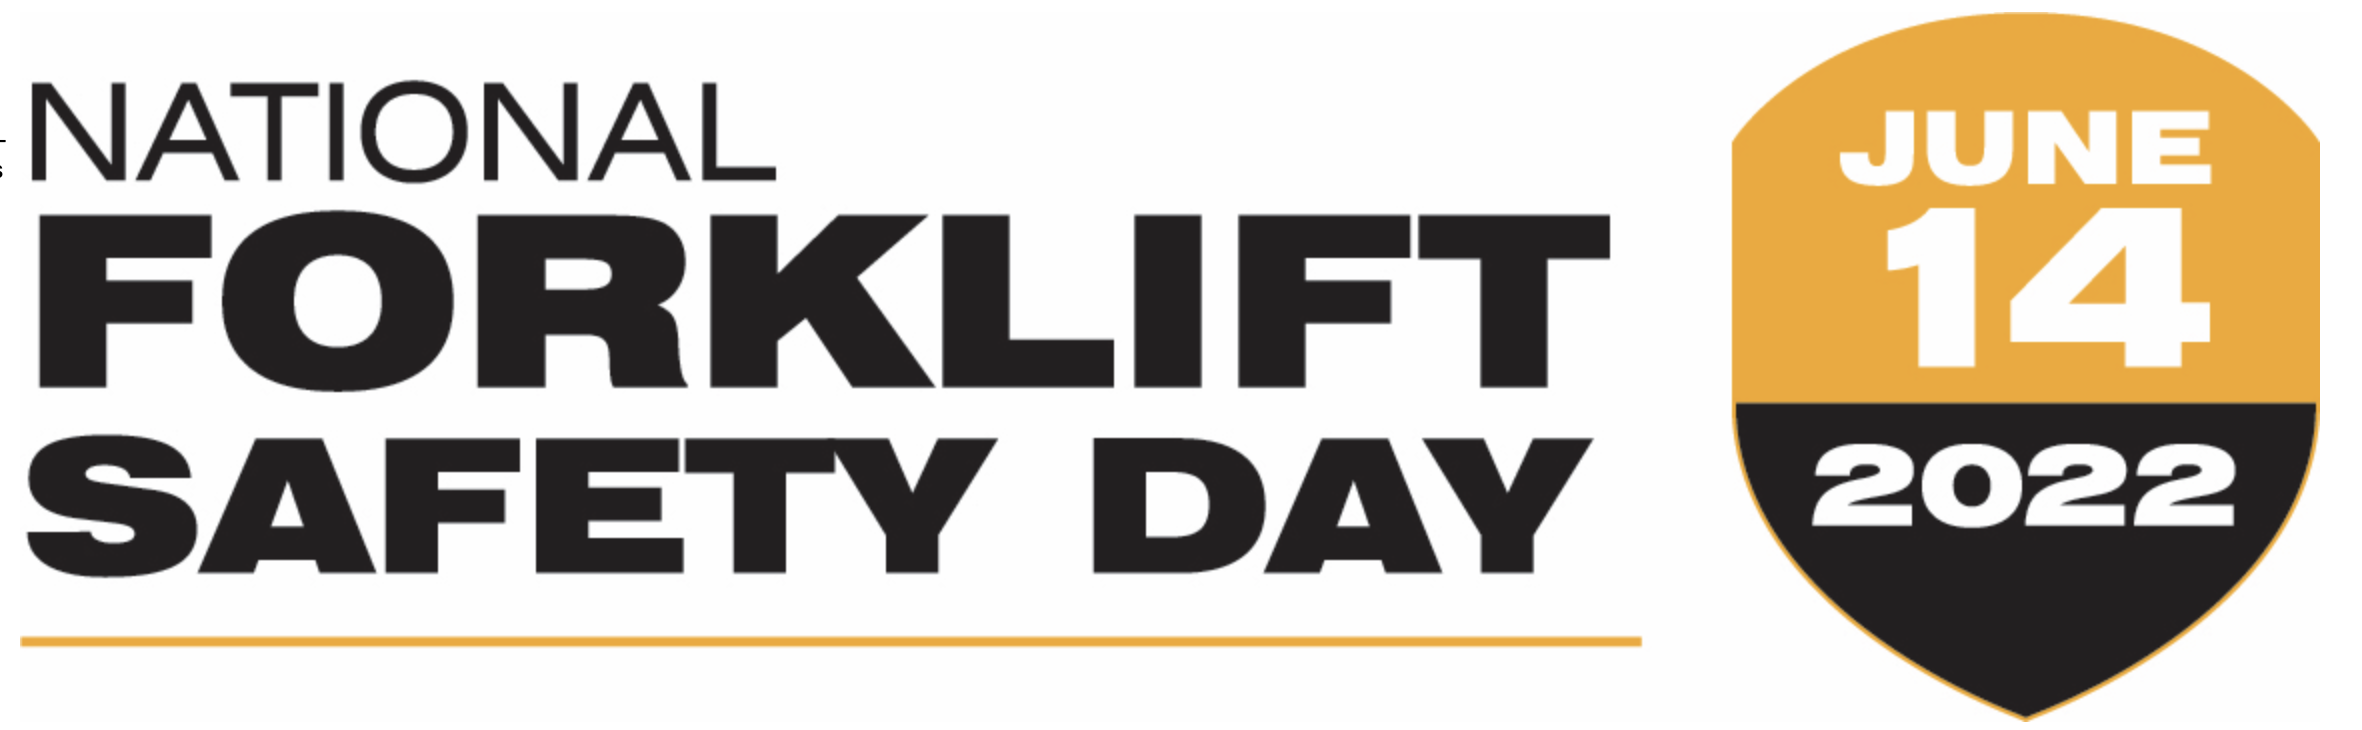 national forklift safety day